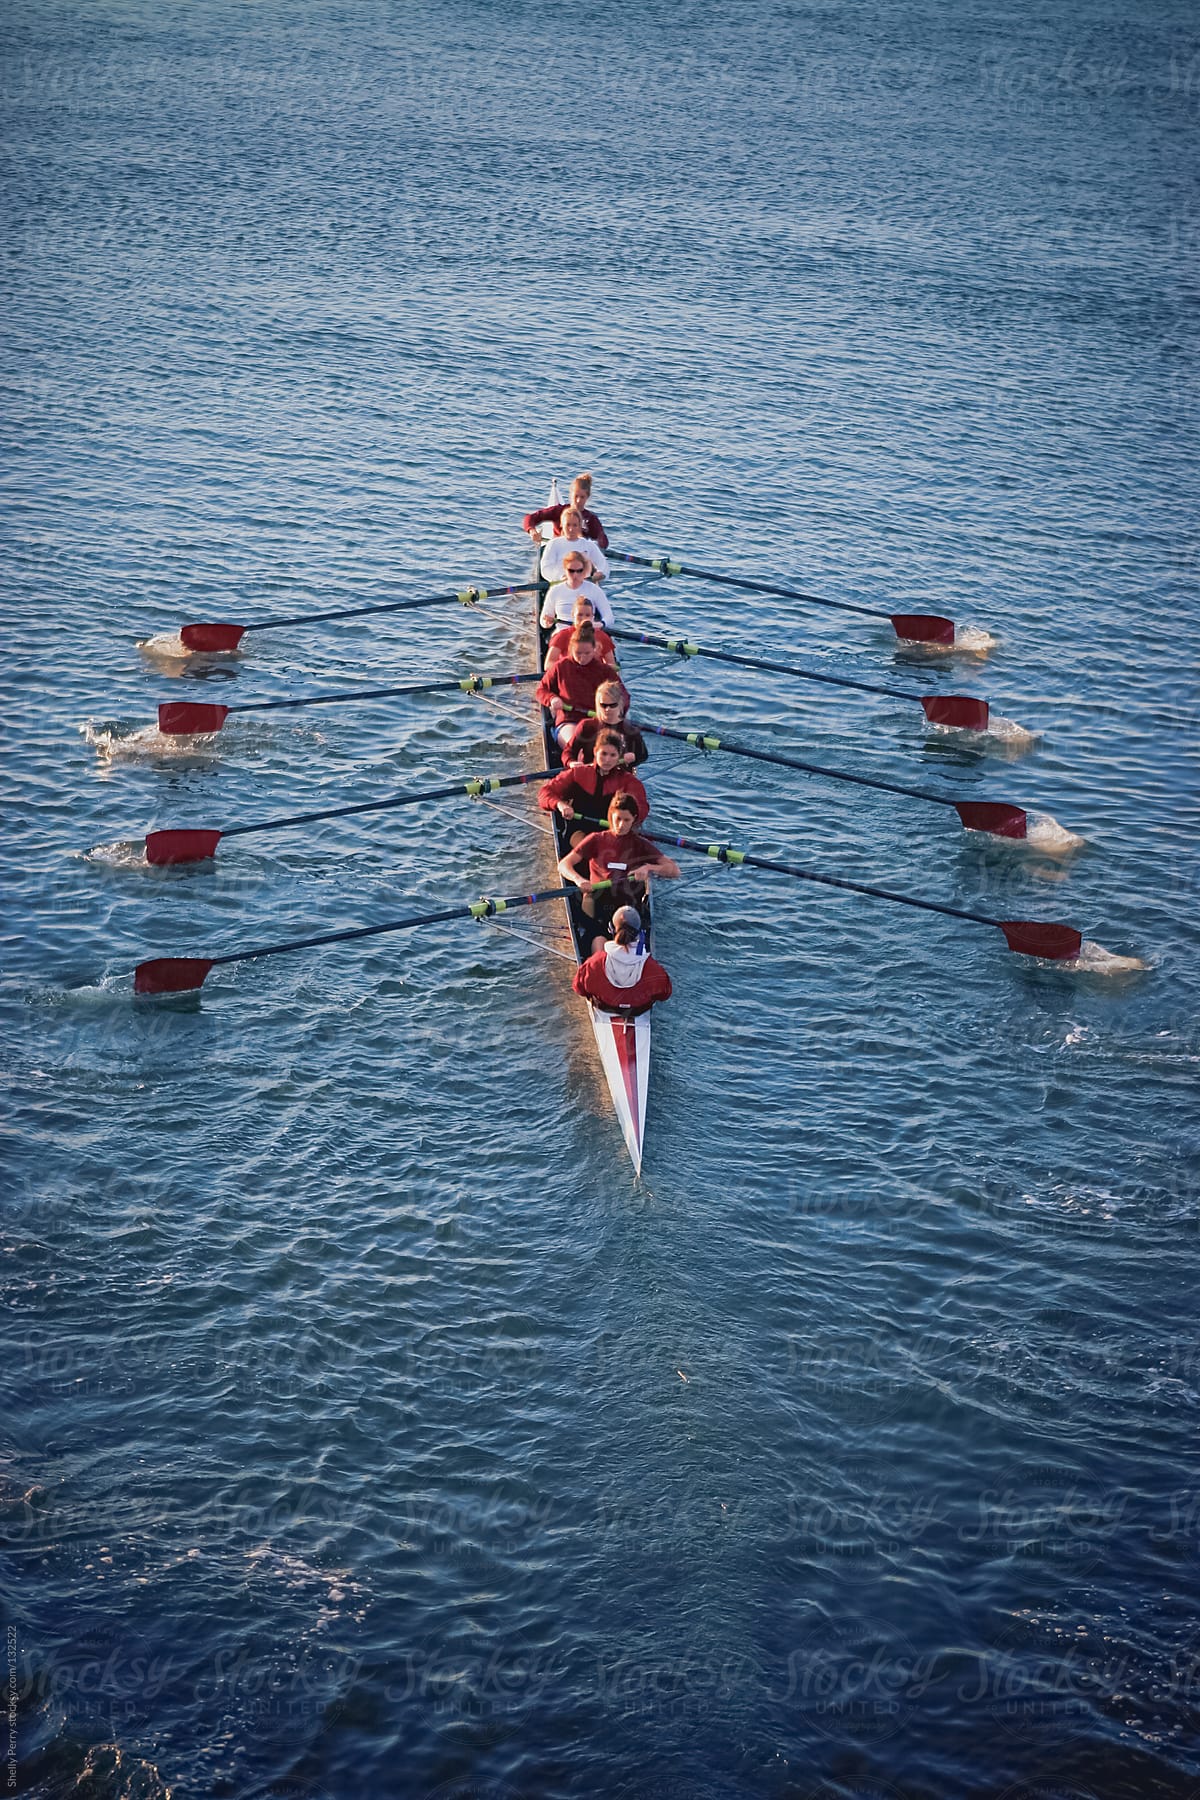 Women\'s crew team rowing in unison